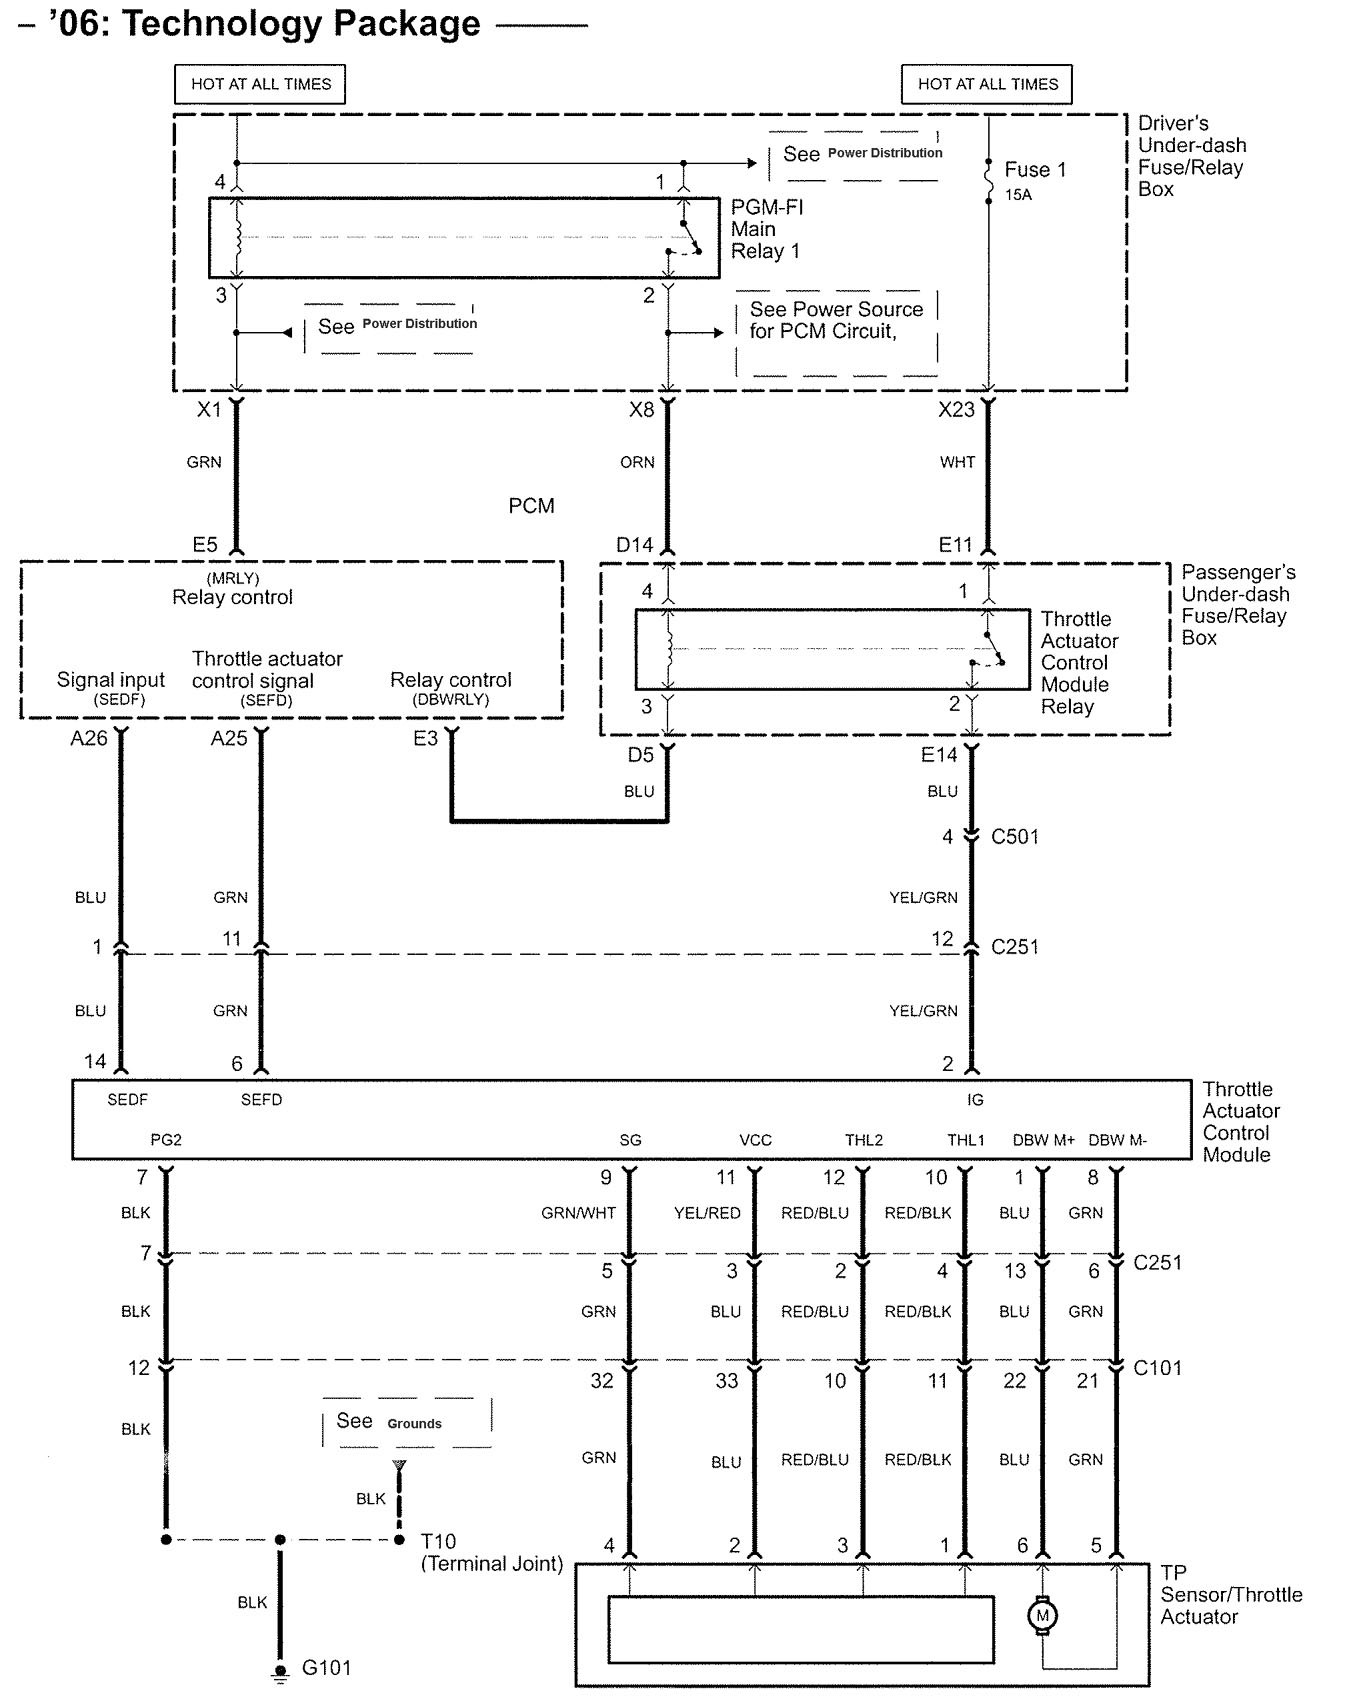 maxon liftgate wiring diagram